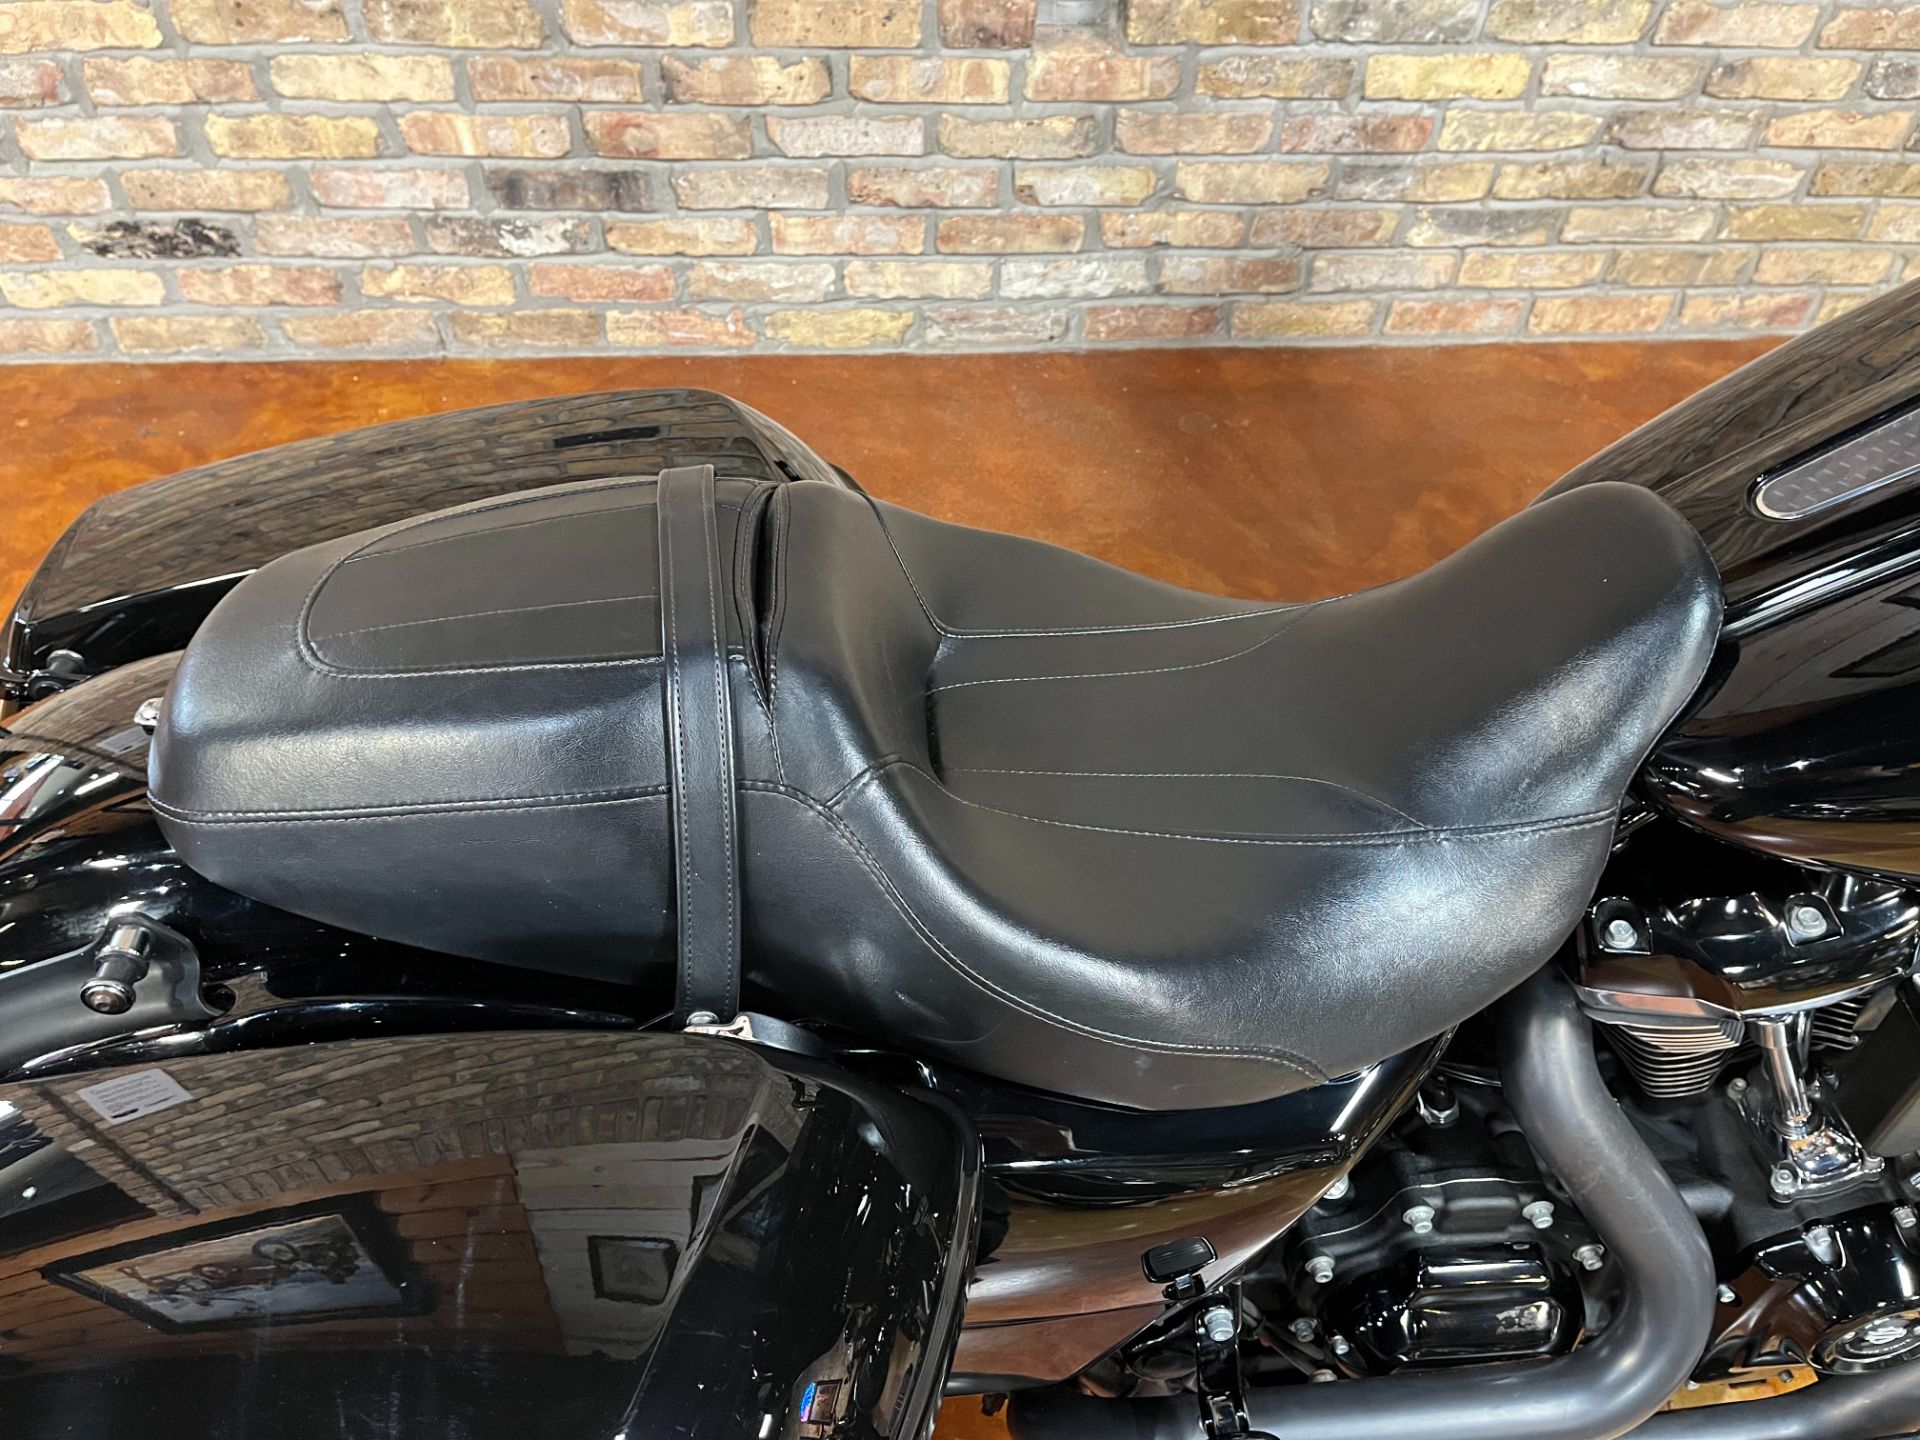 2019 Harley-Davidson Street Glide® Special in Big Bend, Wisconsin - Photo 20